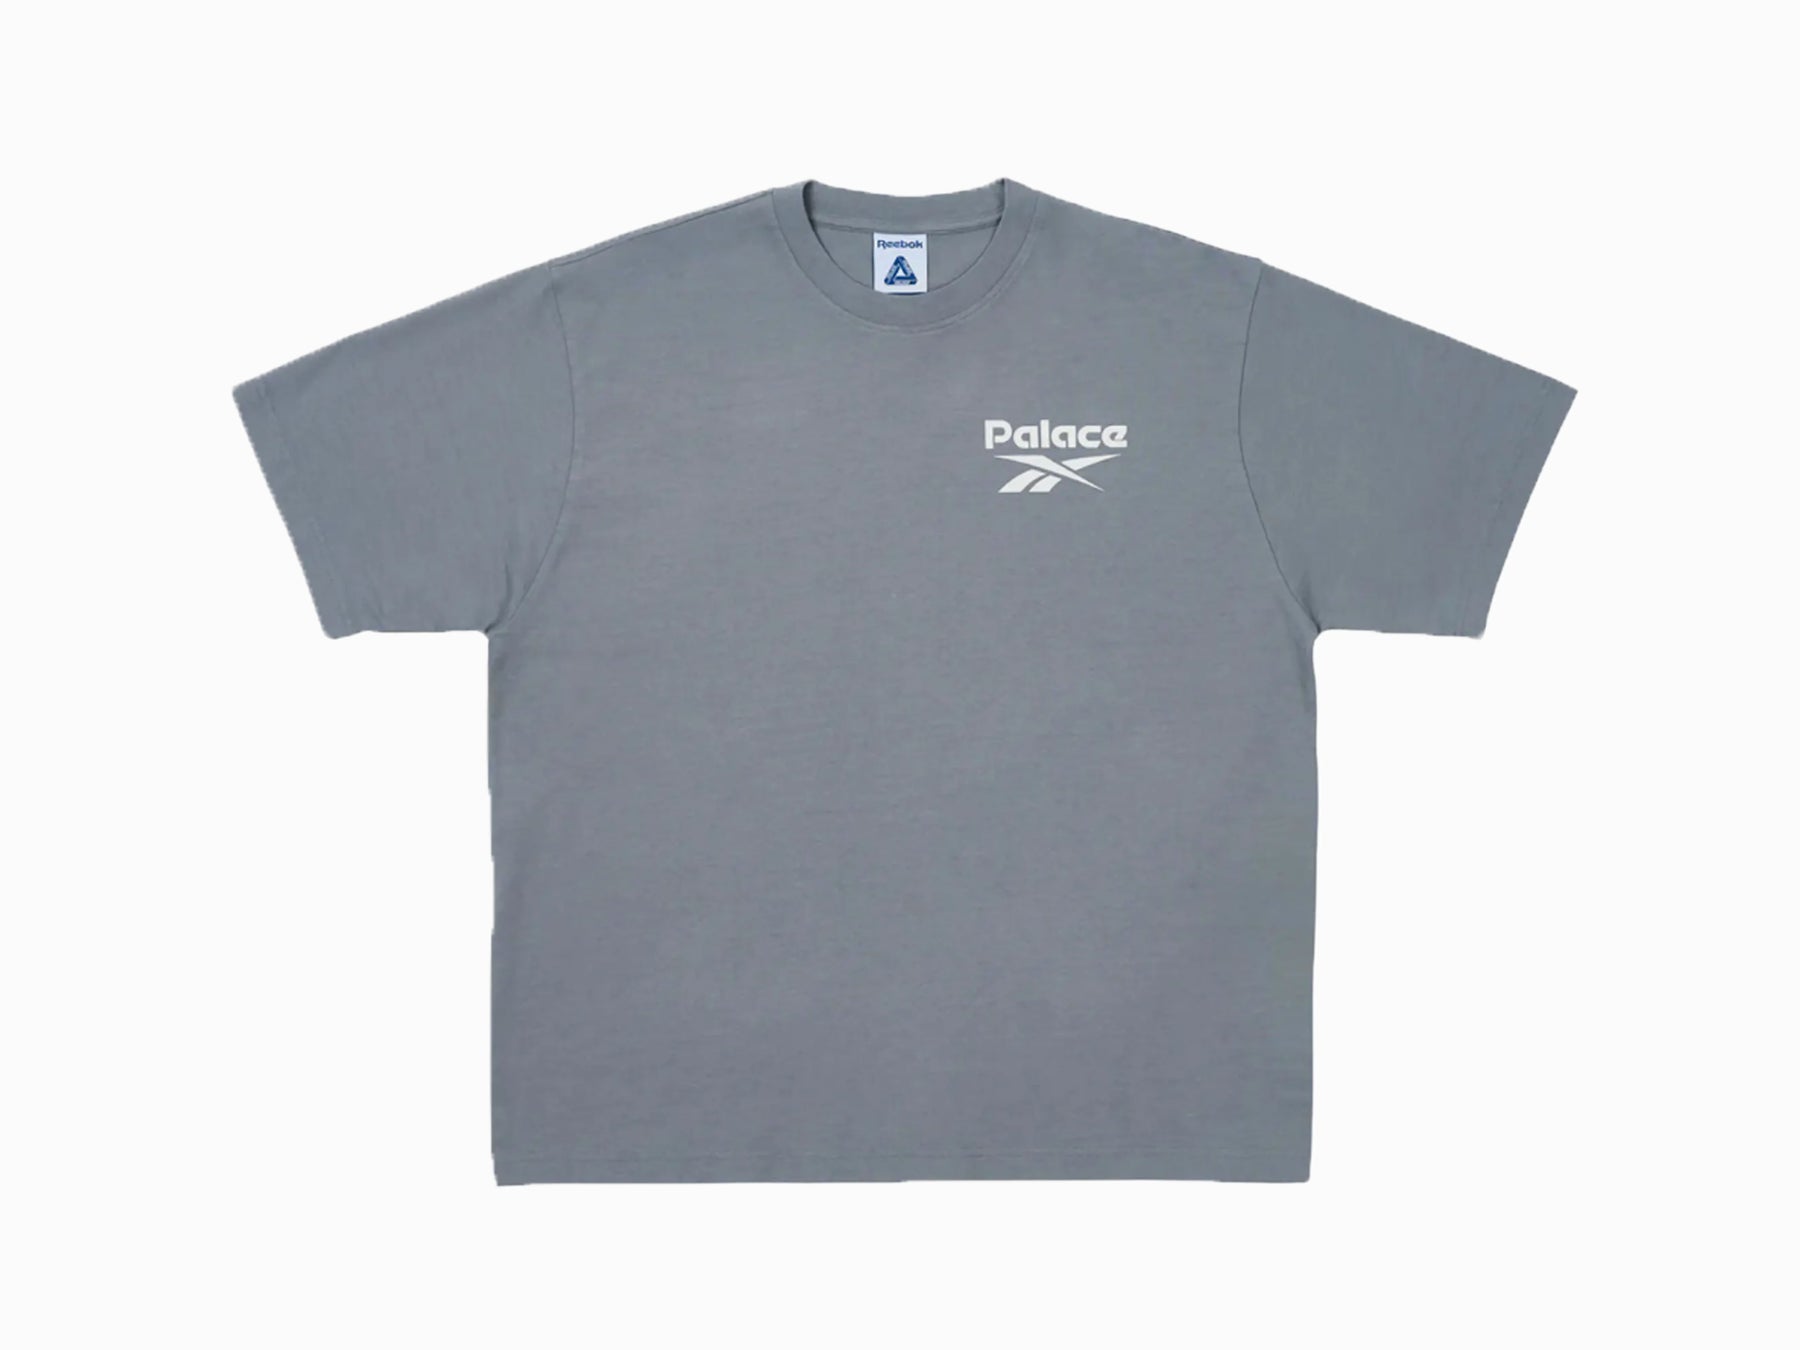 Palace x Reebok Grey T Shirt – Copsource Uk